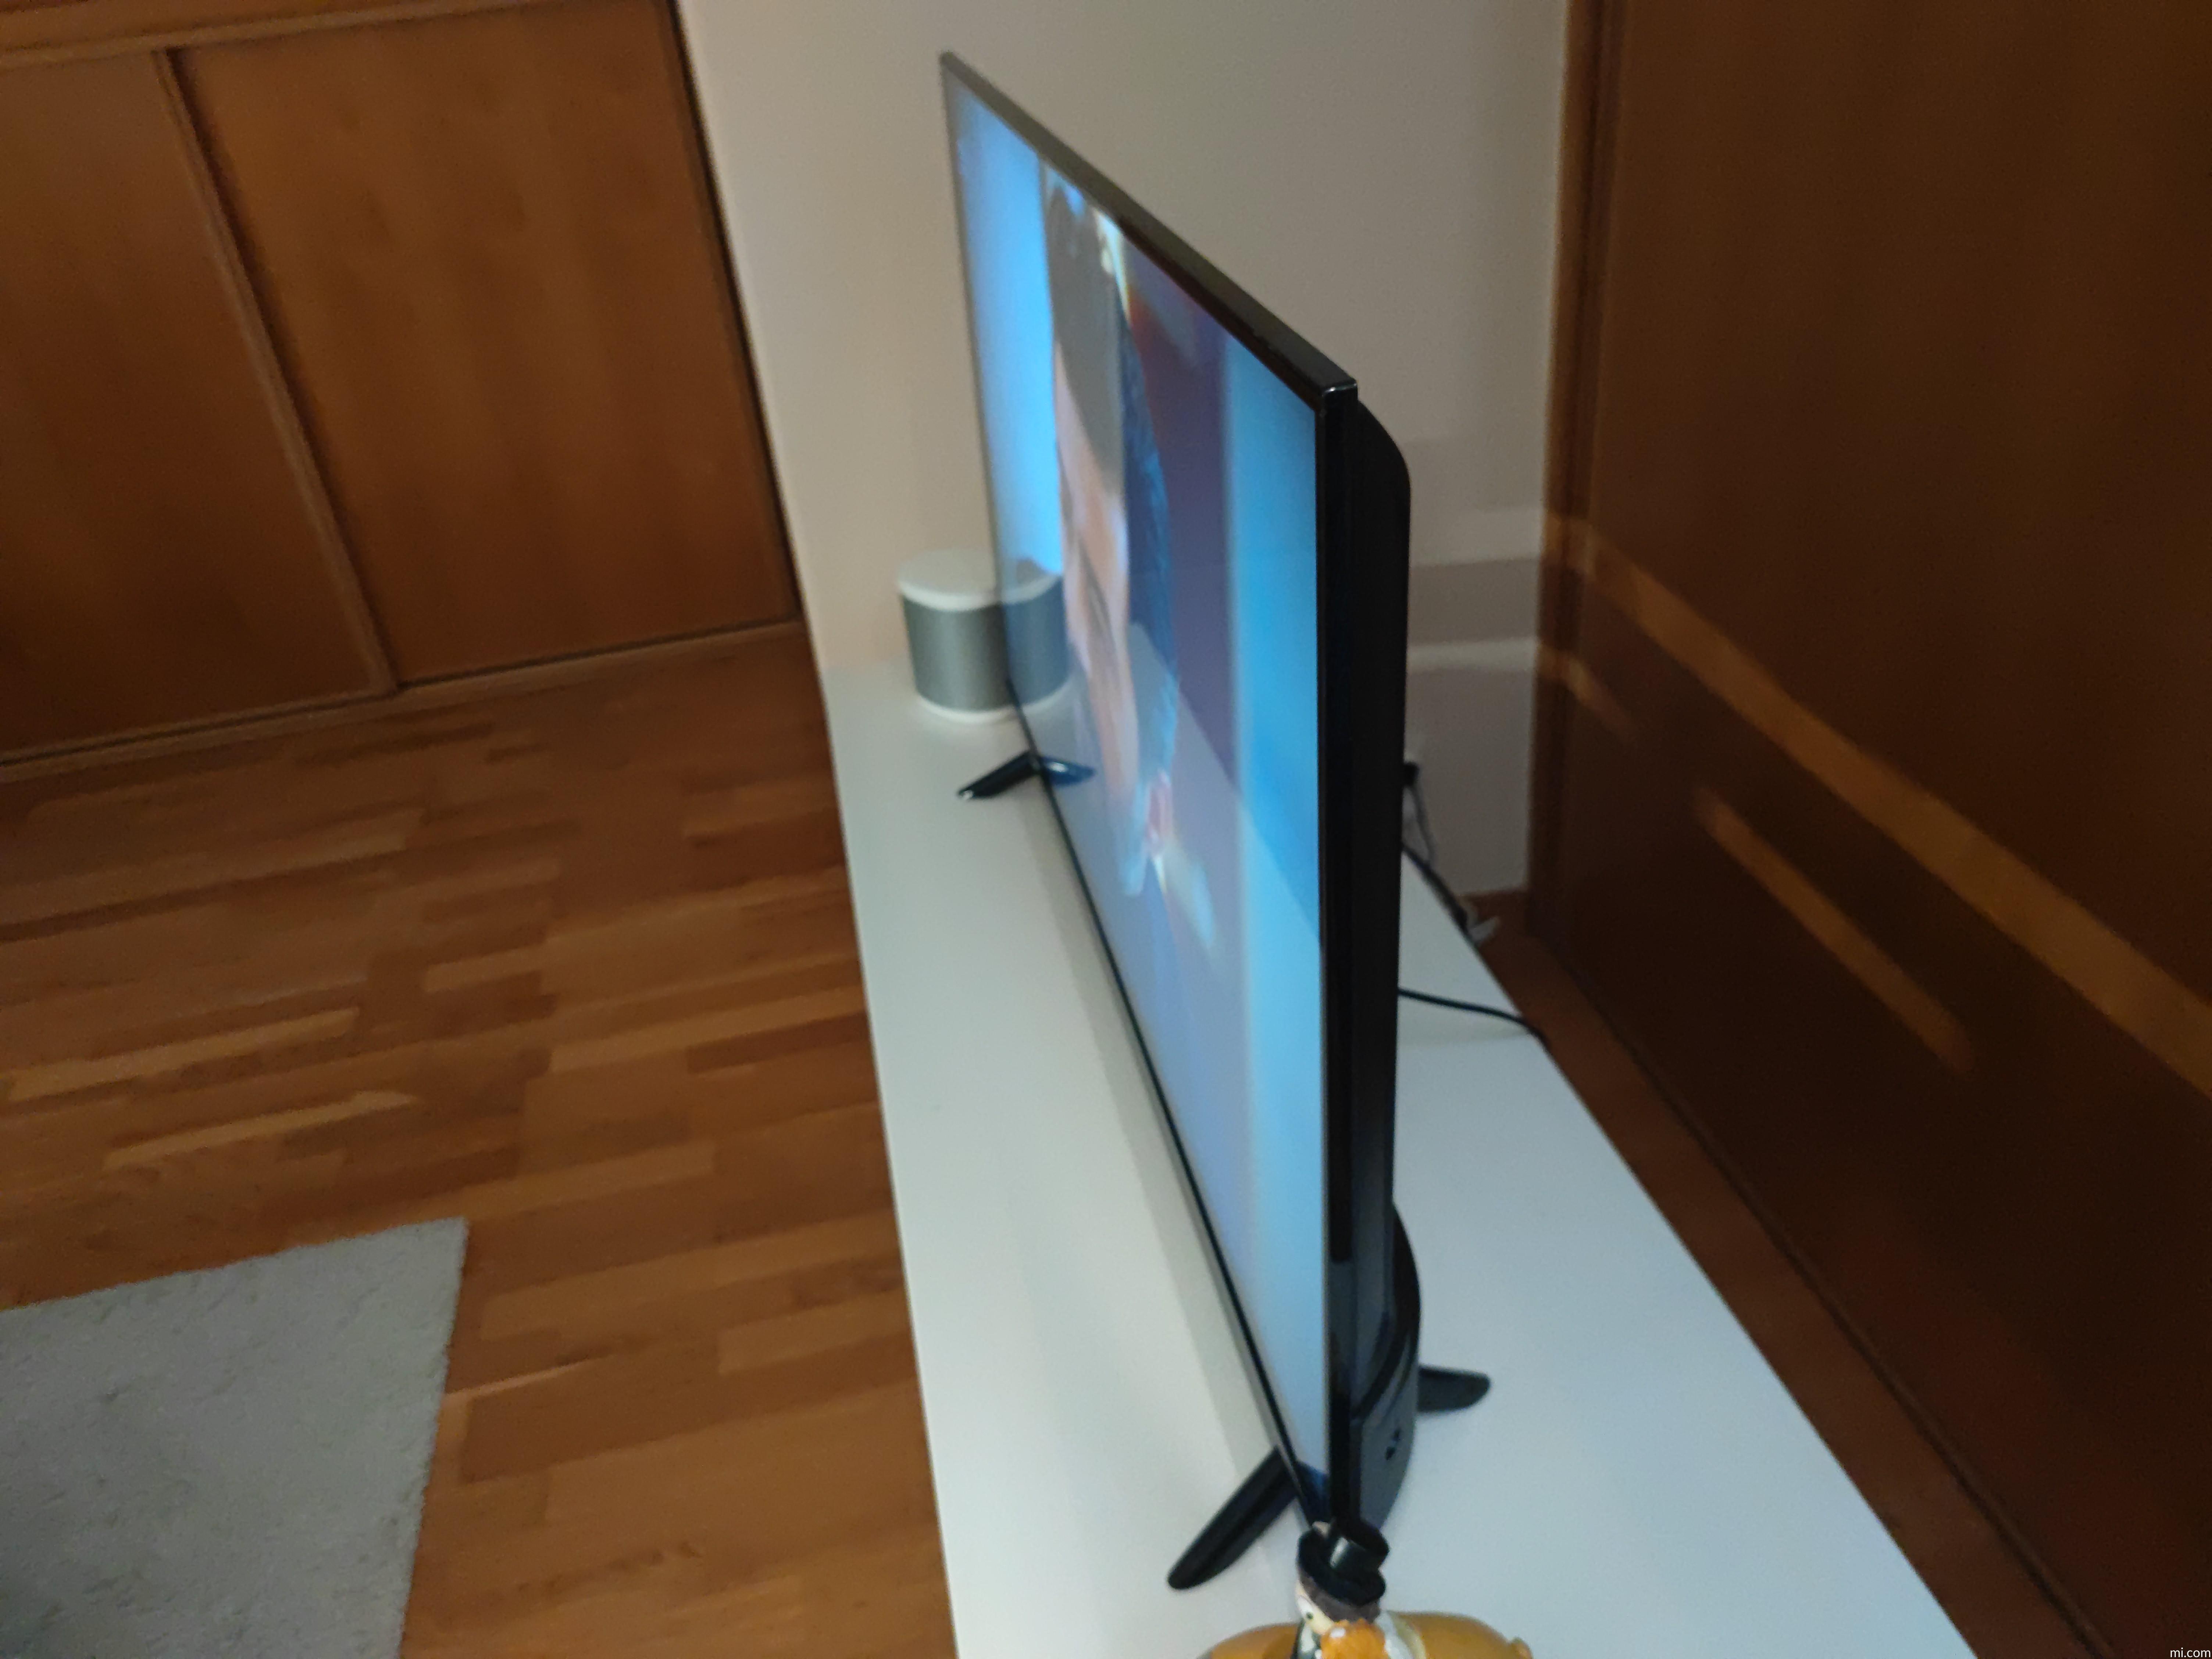 TV XIAOMI 43 Pulgadas 110 cm P1 4K-UHD LED Smart TV Andro